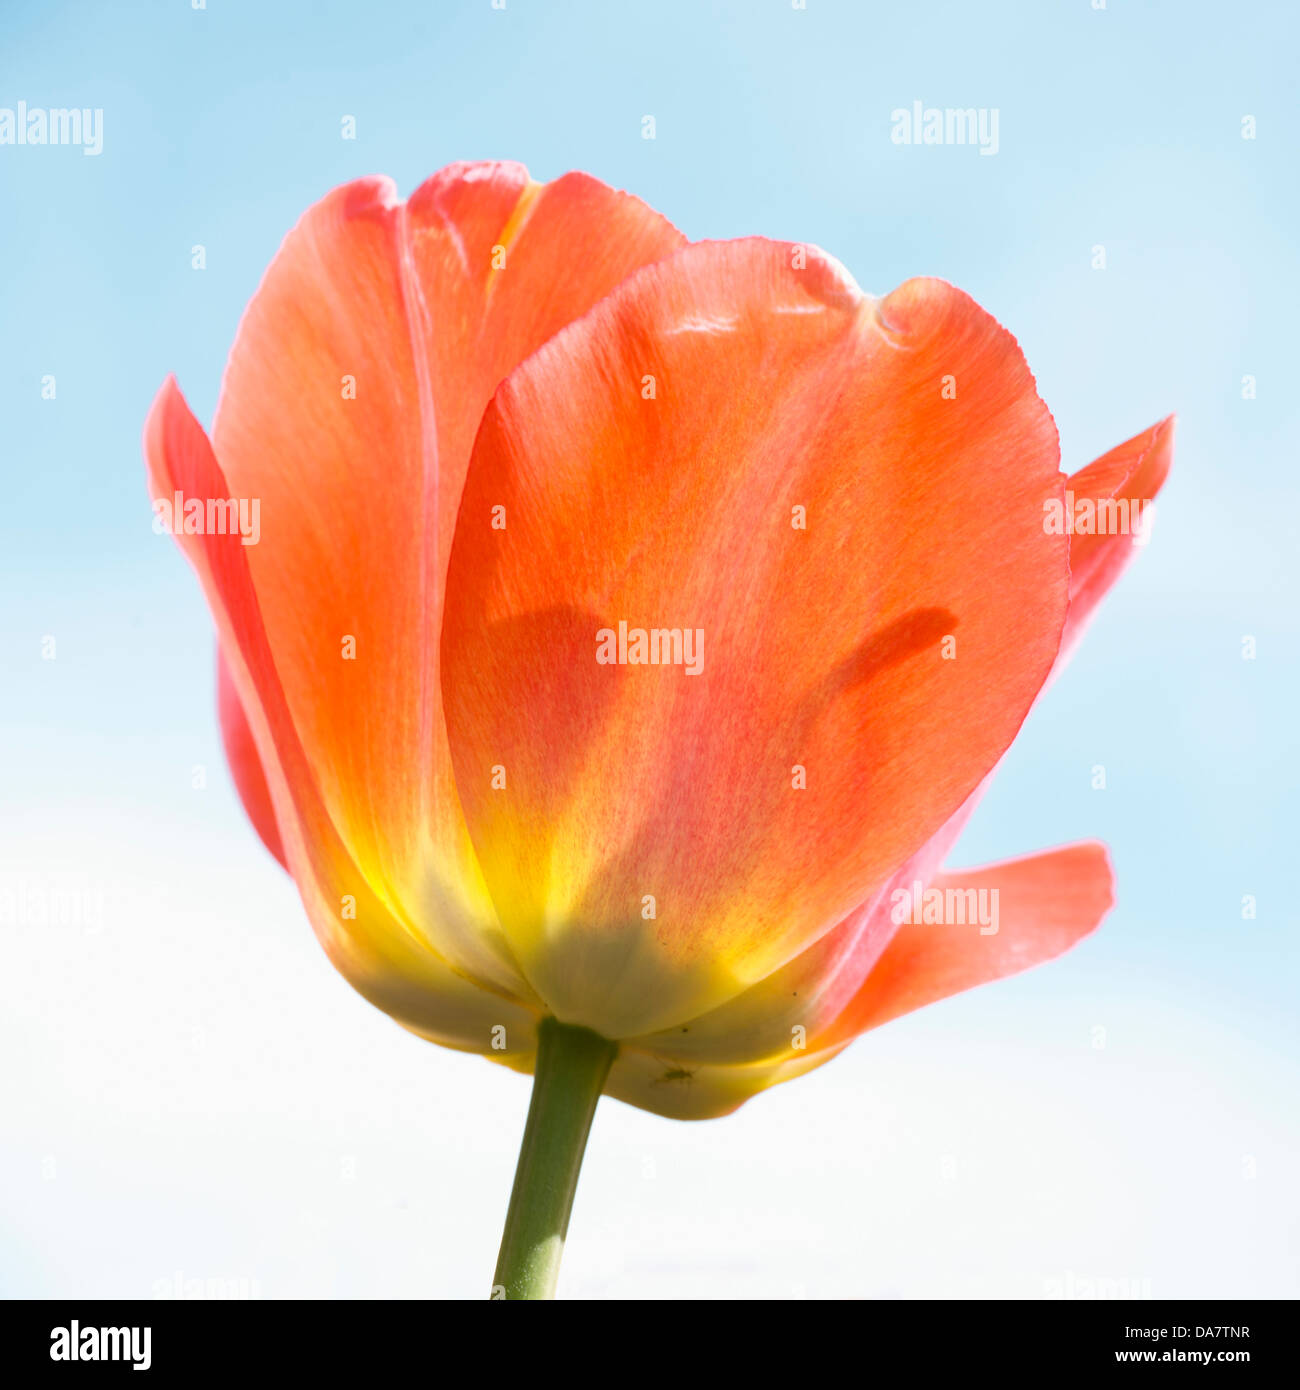 Vibrant orange tulip close-up photo against blue sky. Stock Photo